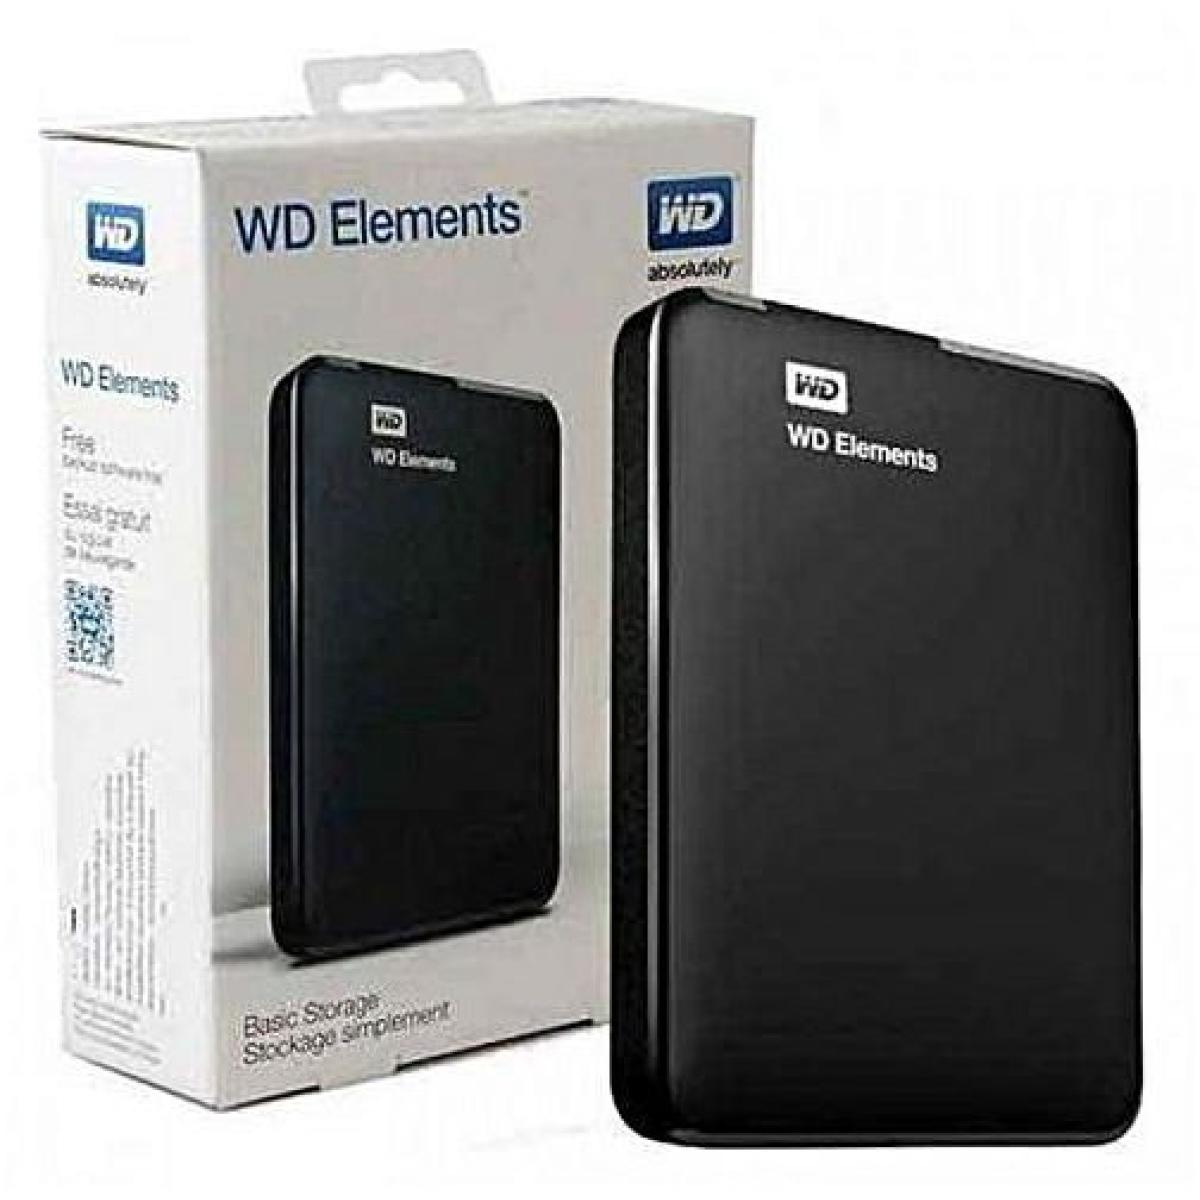 wd elements external hard drive